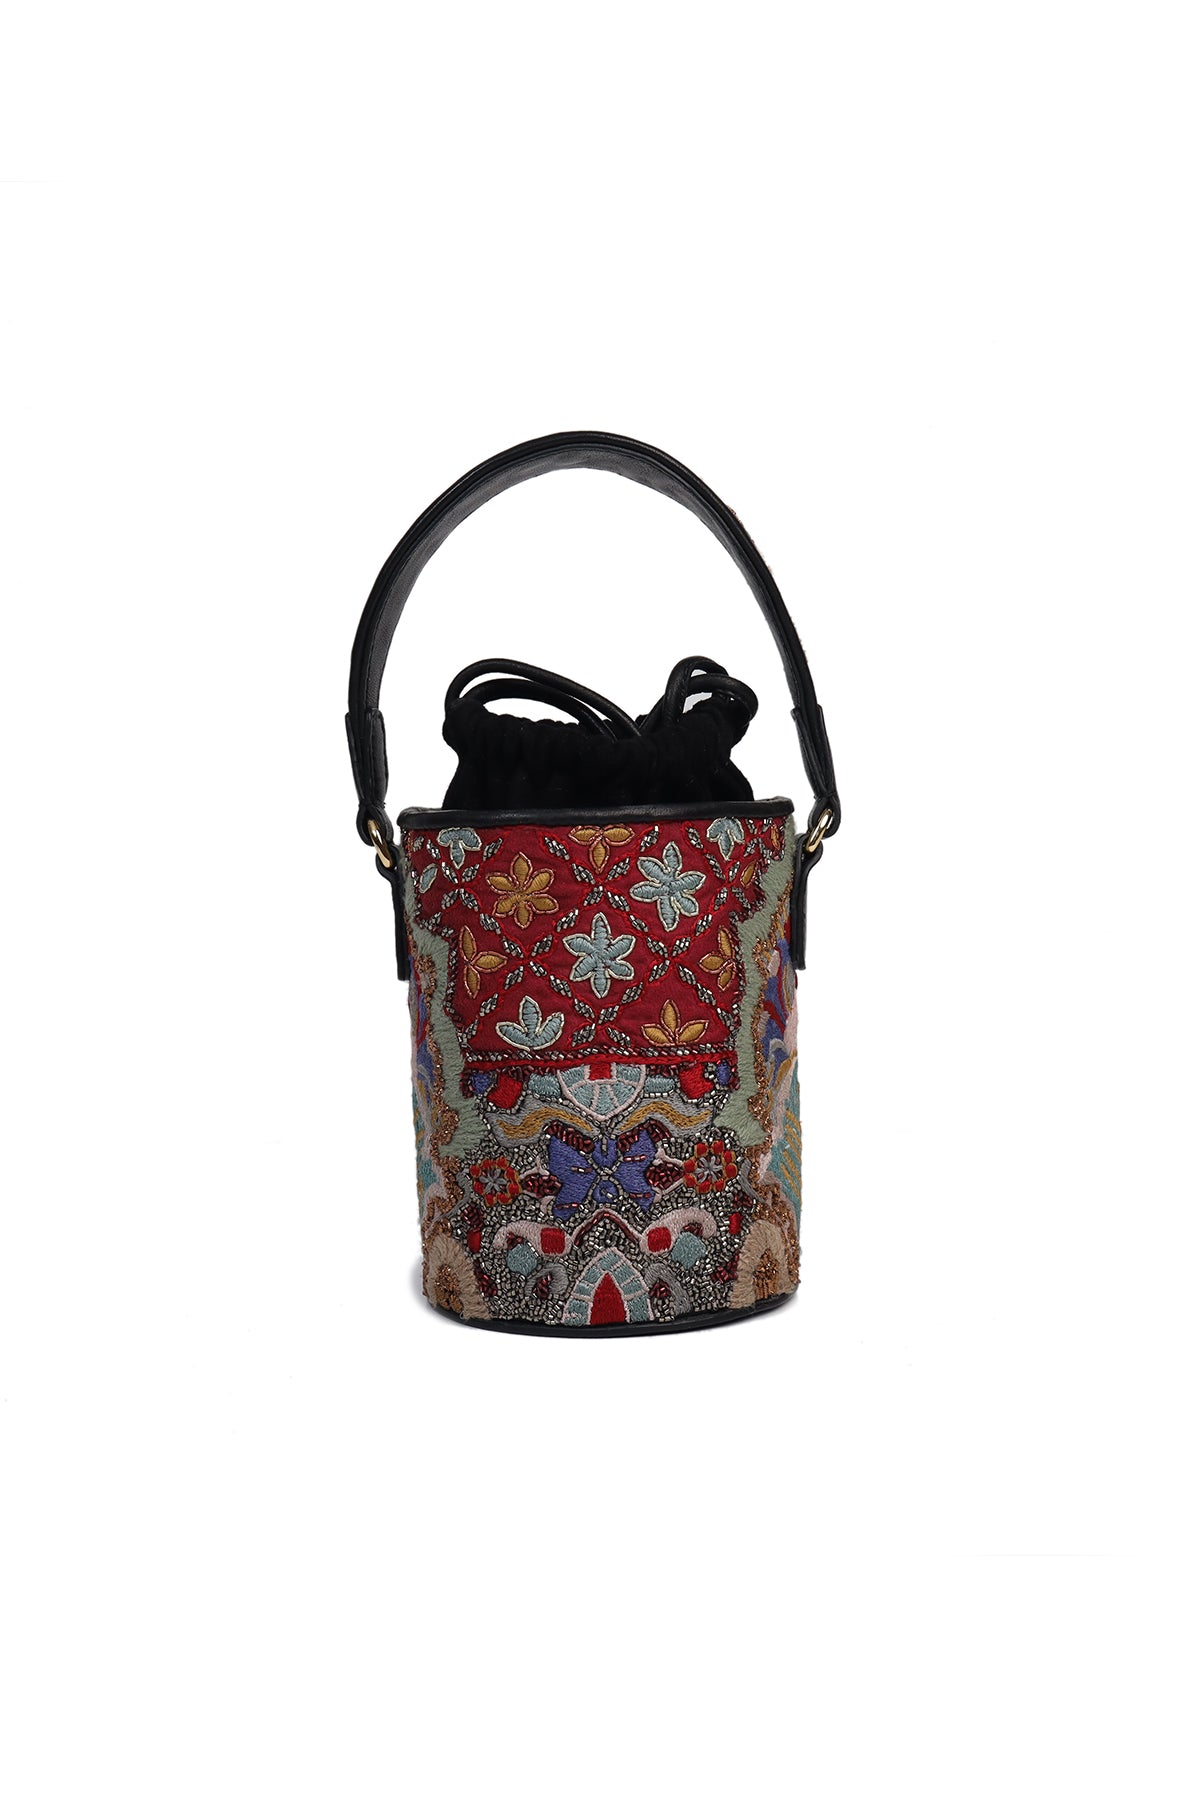 Razia Embellished Potli Bag